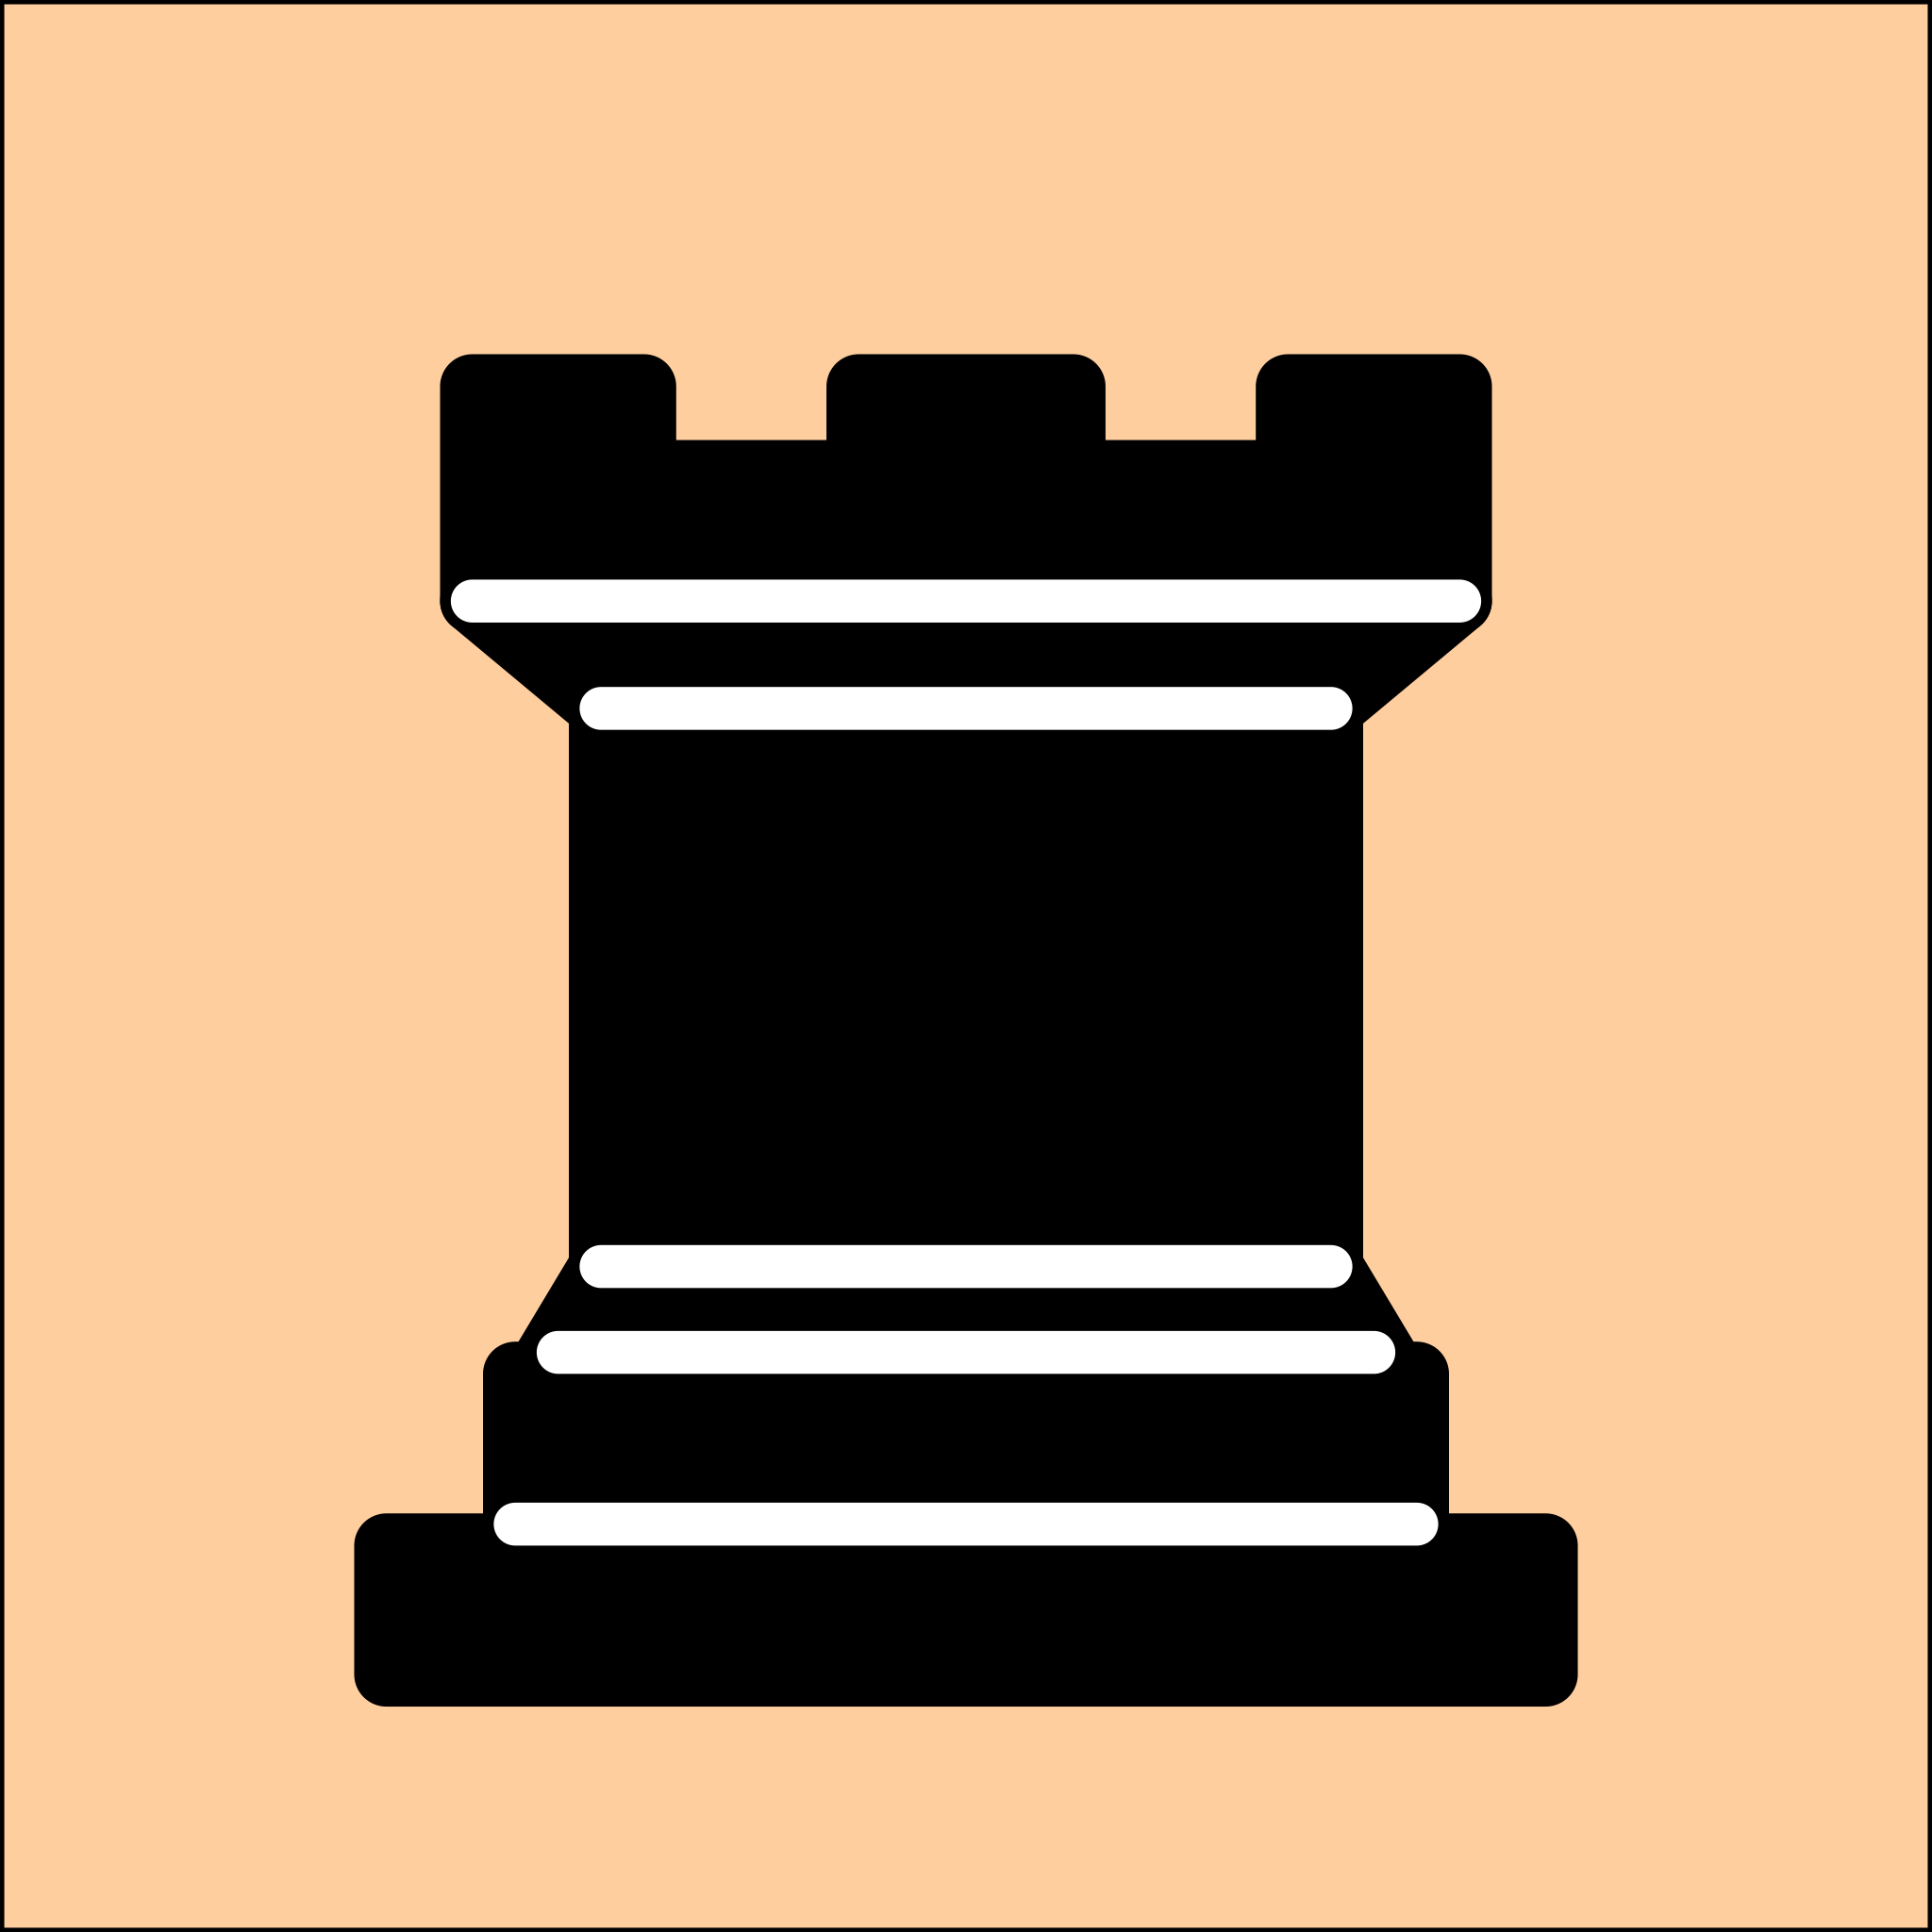 Chaturanga - Wikipedia, la enciclopedia libre